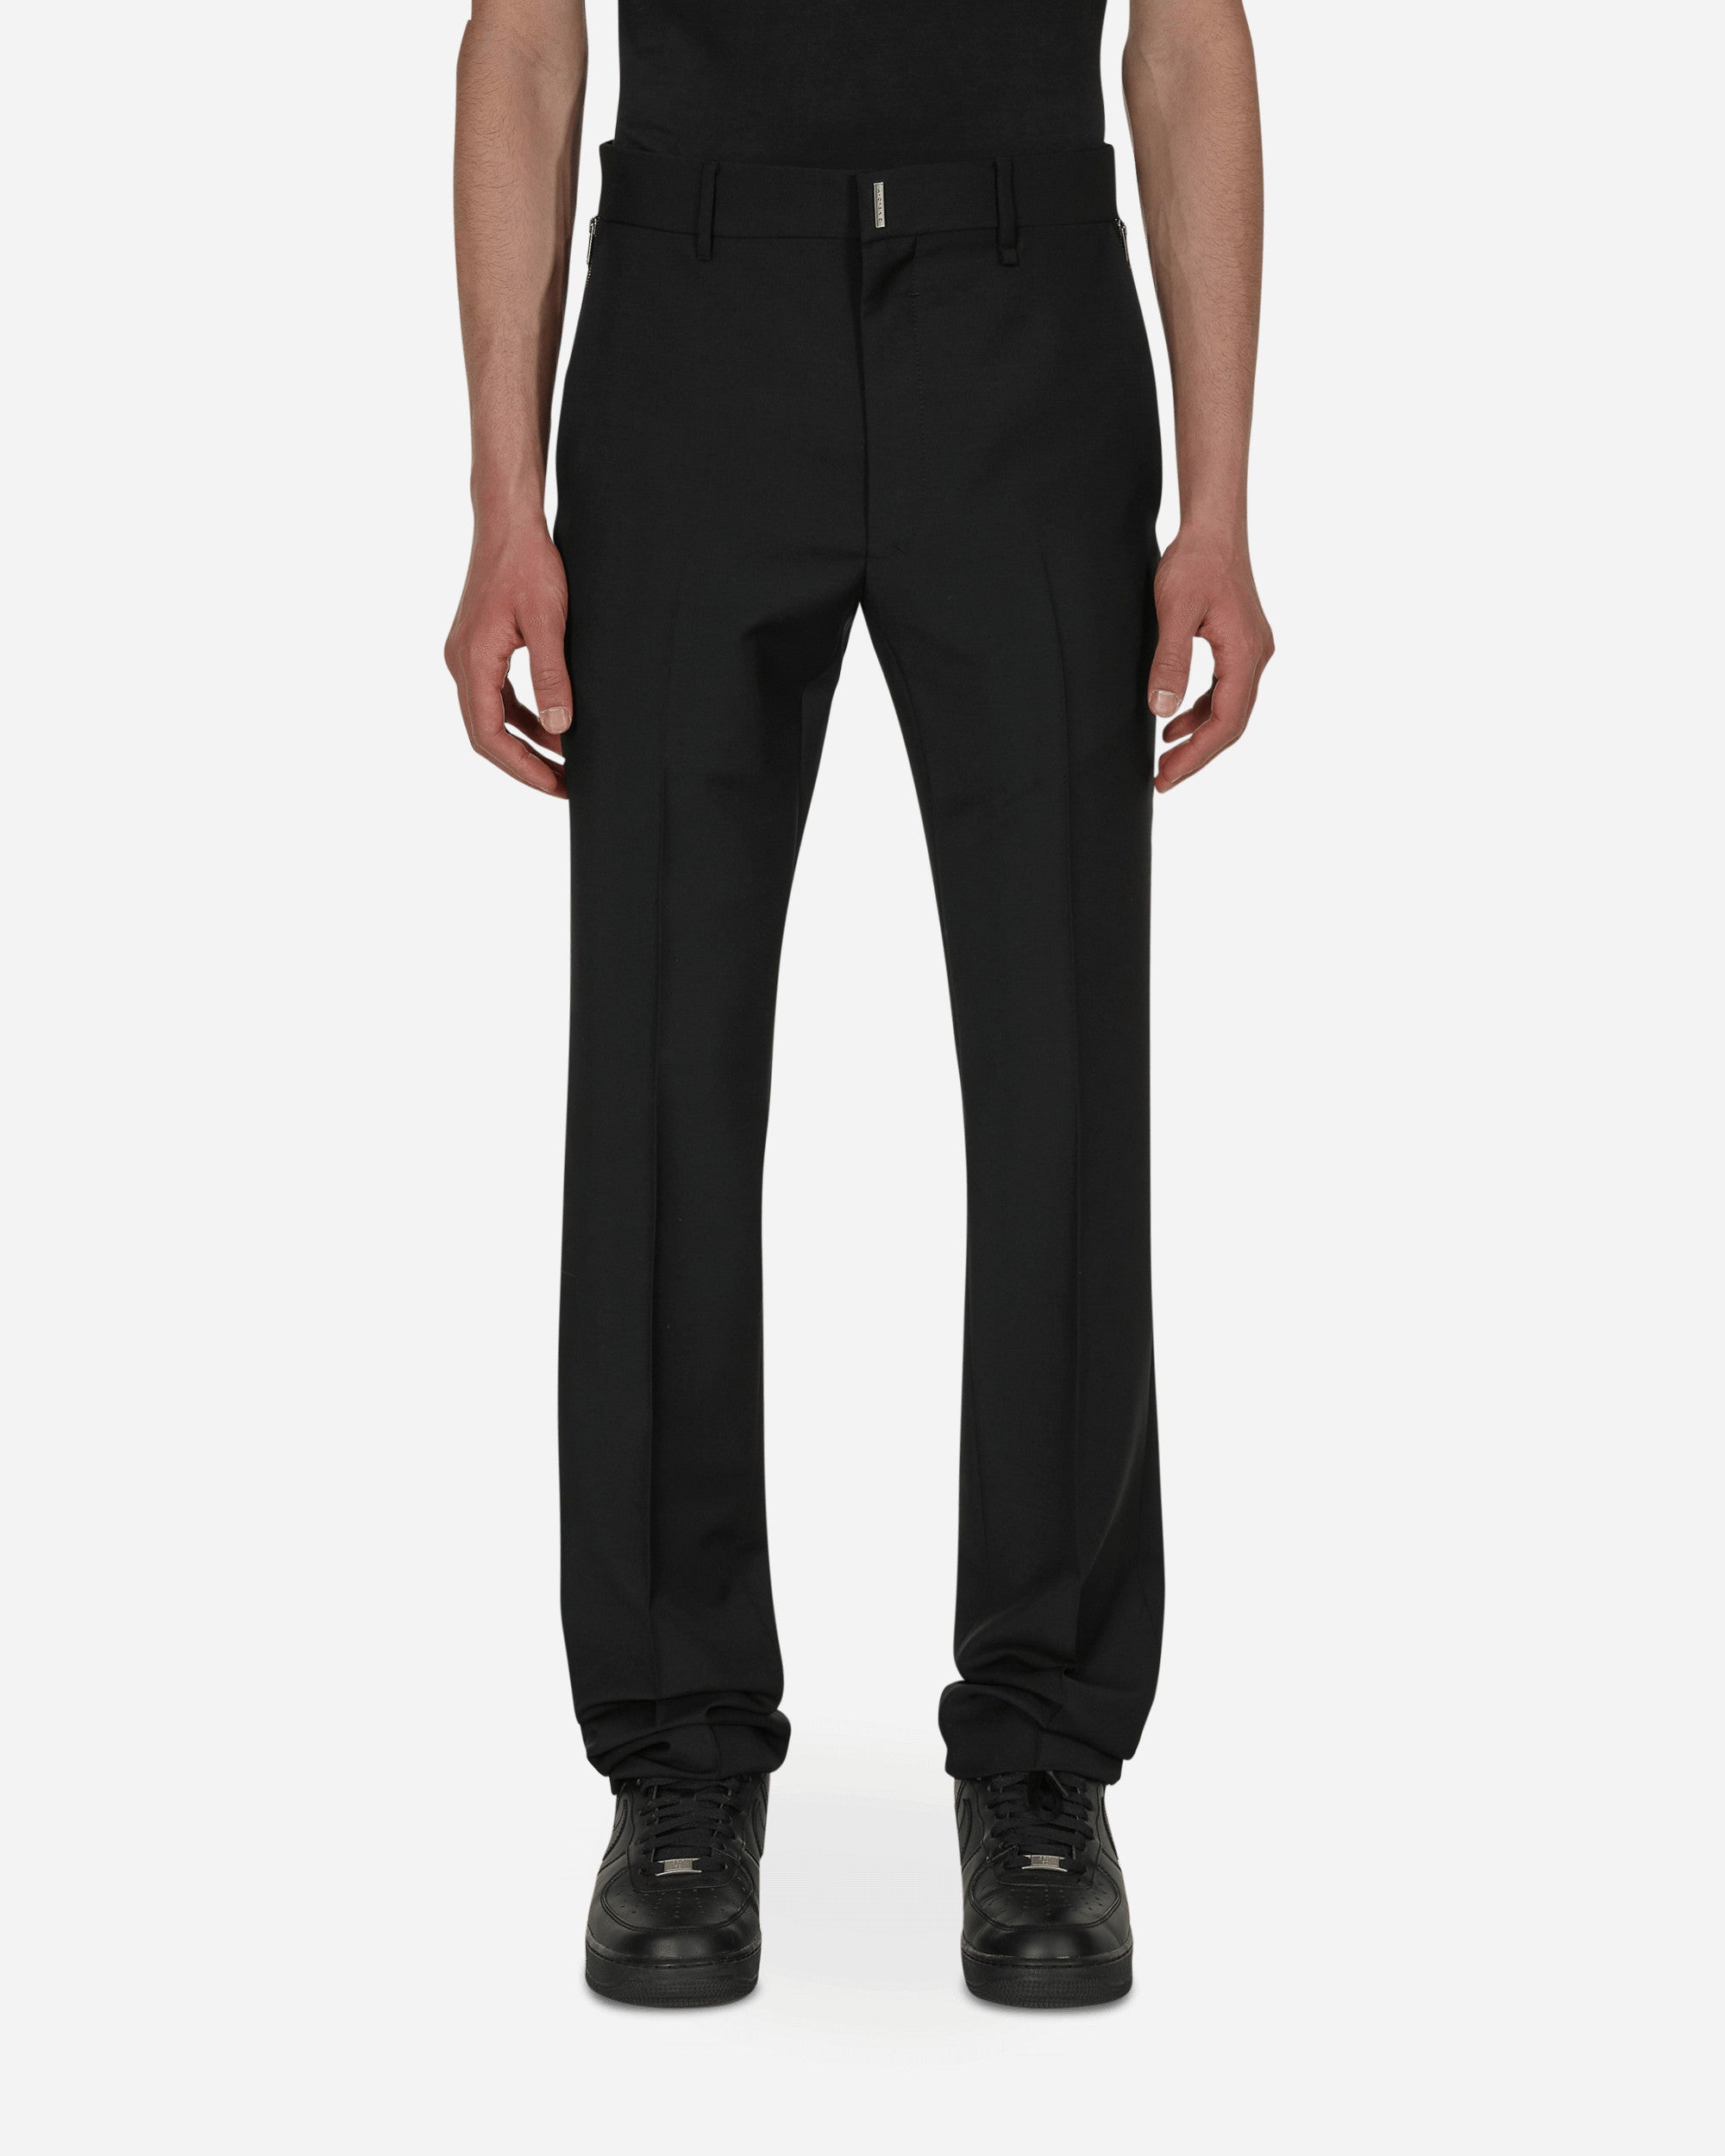 Givenchy Classic Fit Trousers W/ Zip Details Black/Silvery Pants Trousers BM50ZC100H 008